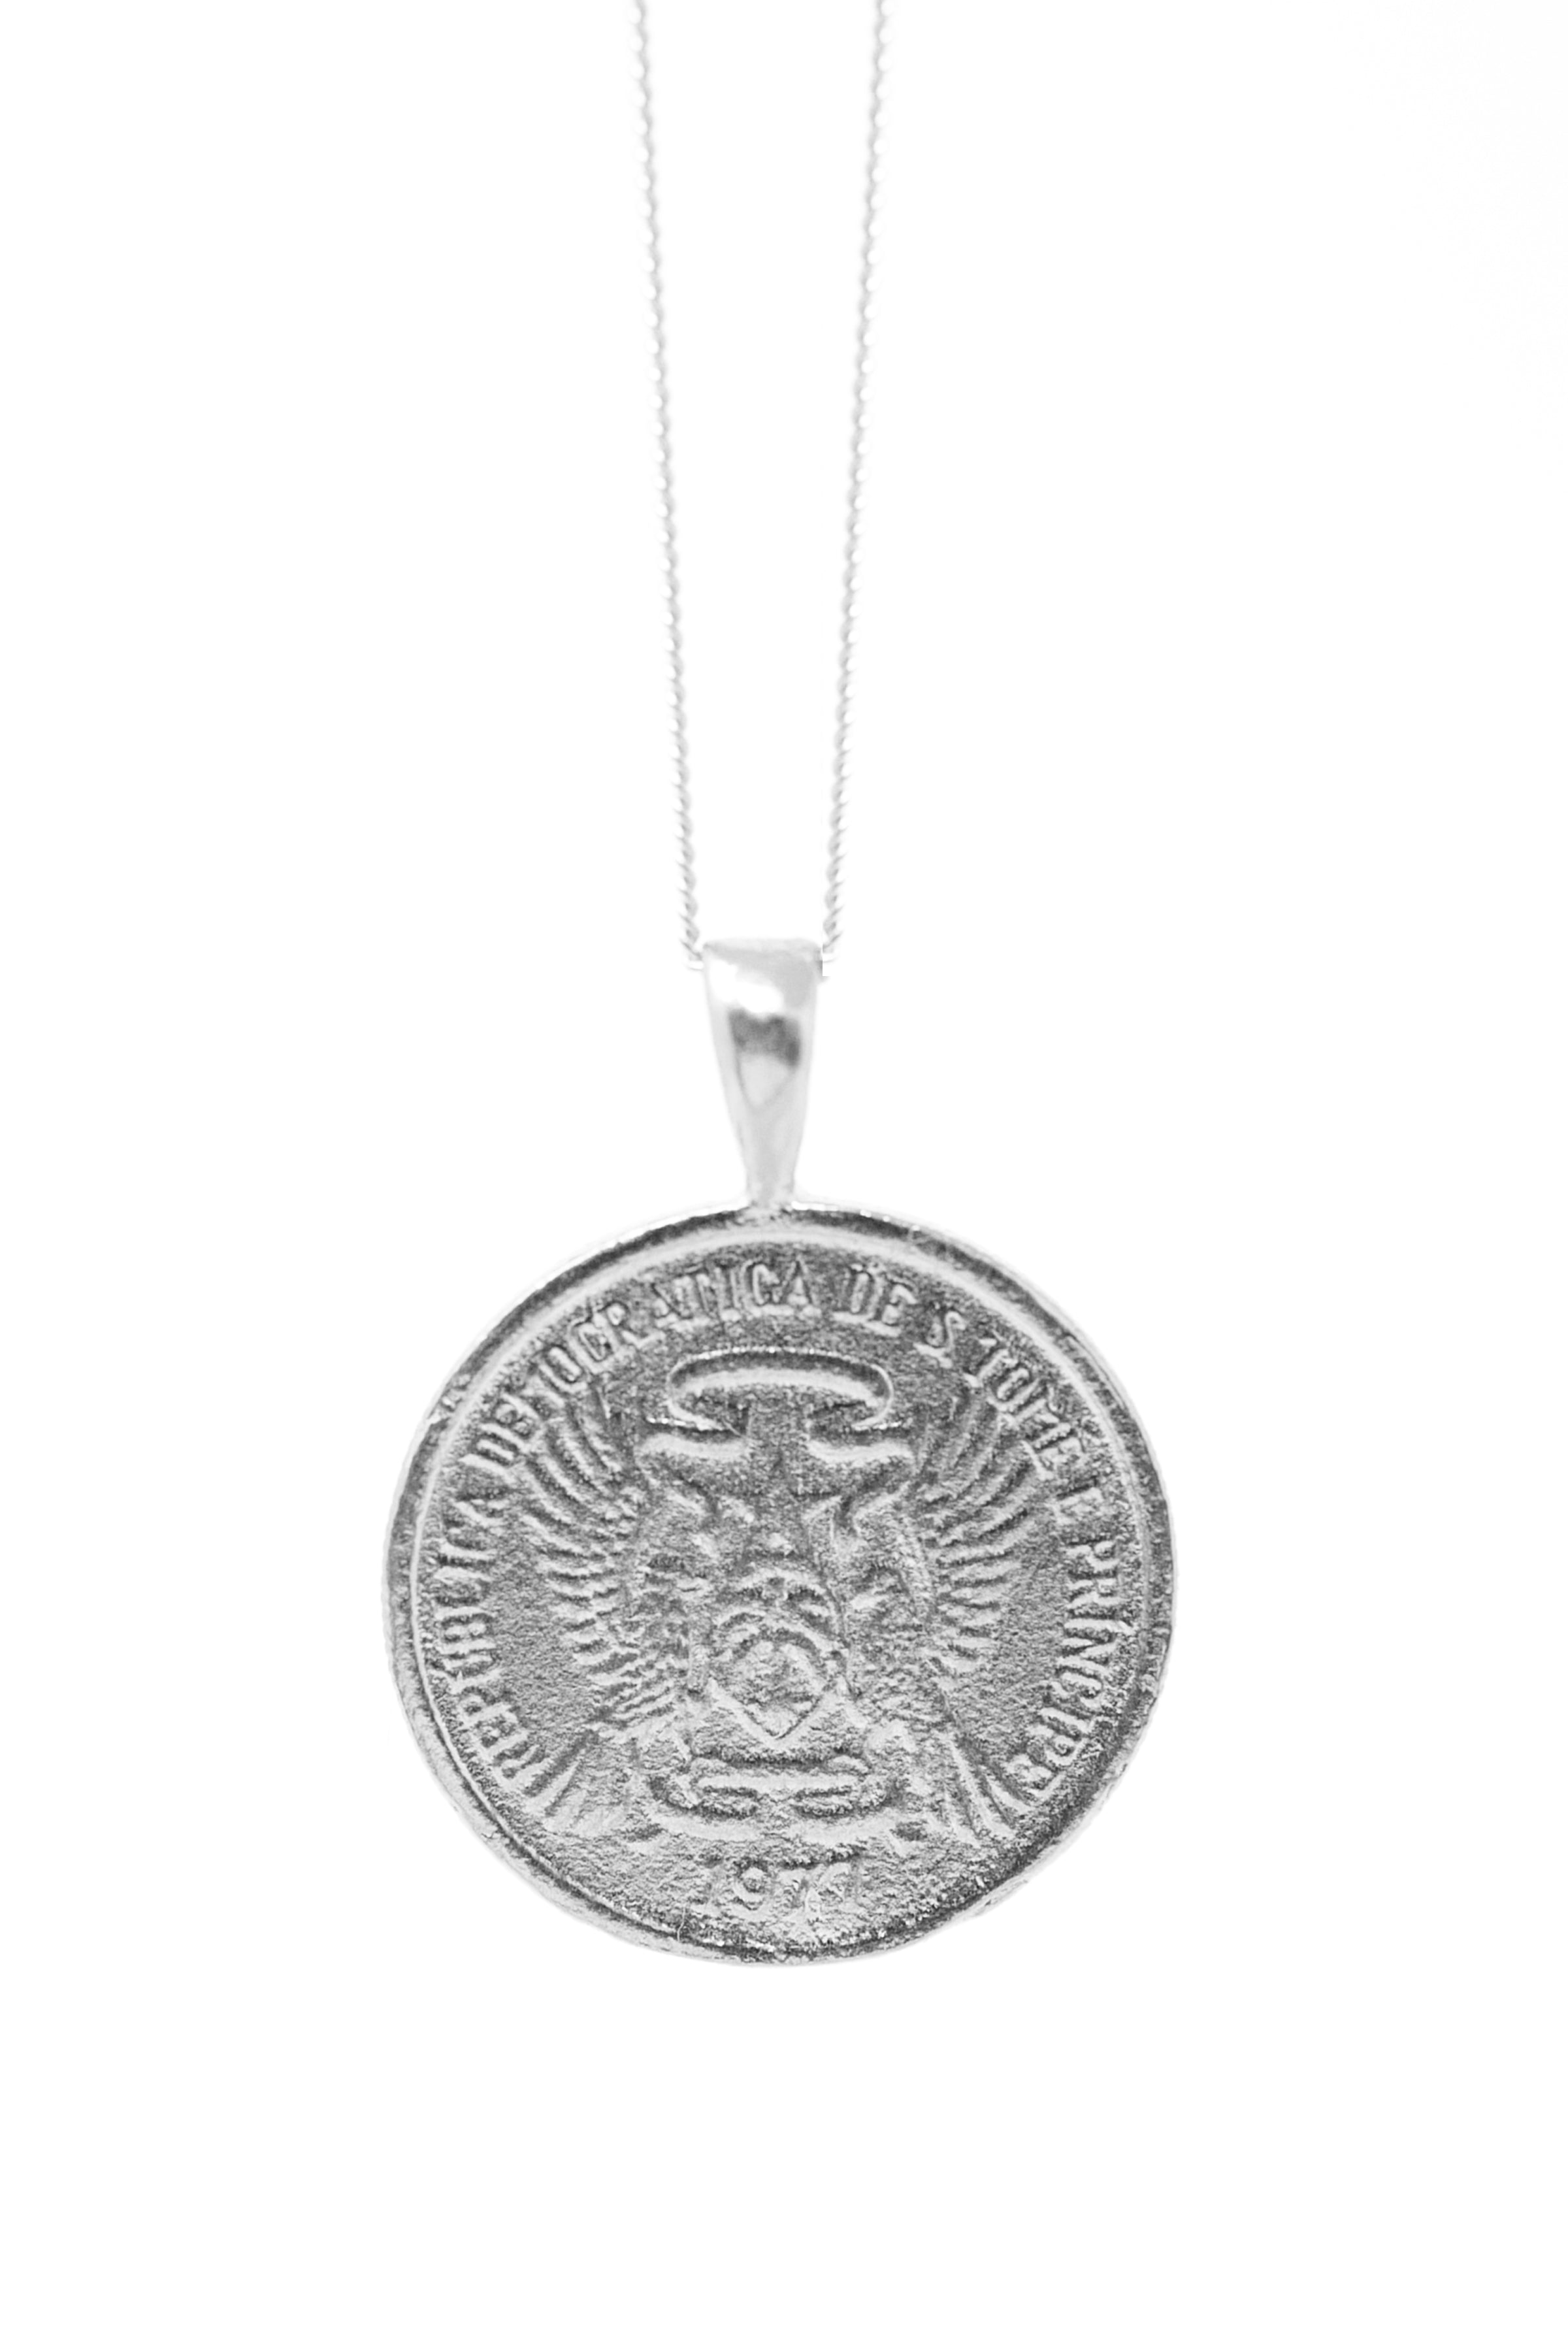 THE SAO Tome and Principe Cocoa Coin Necklace